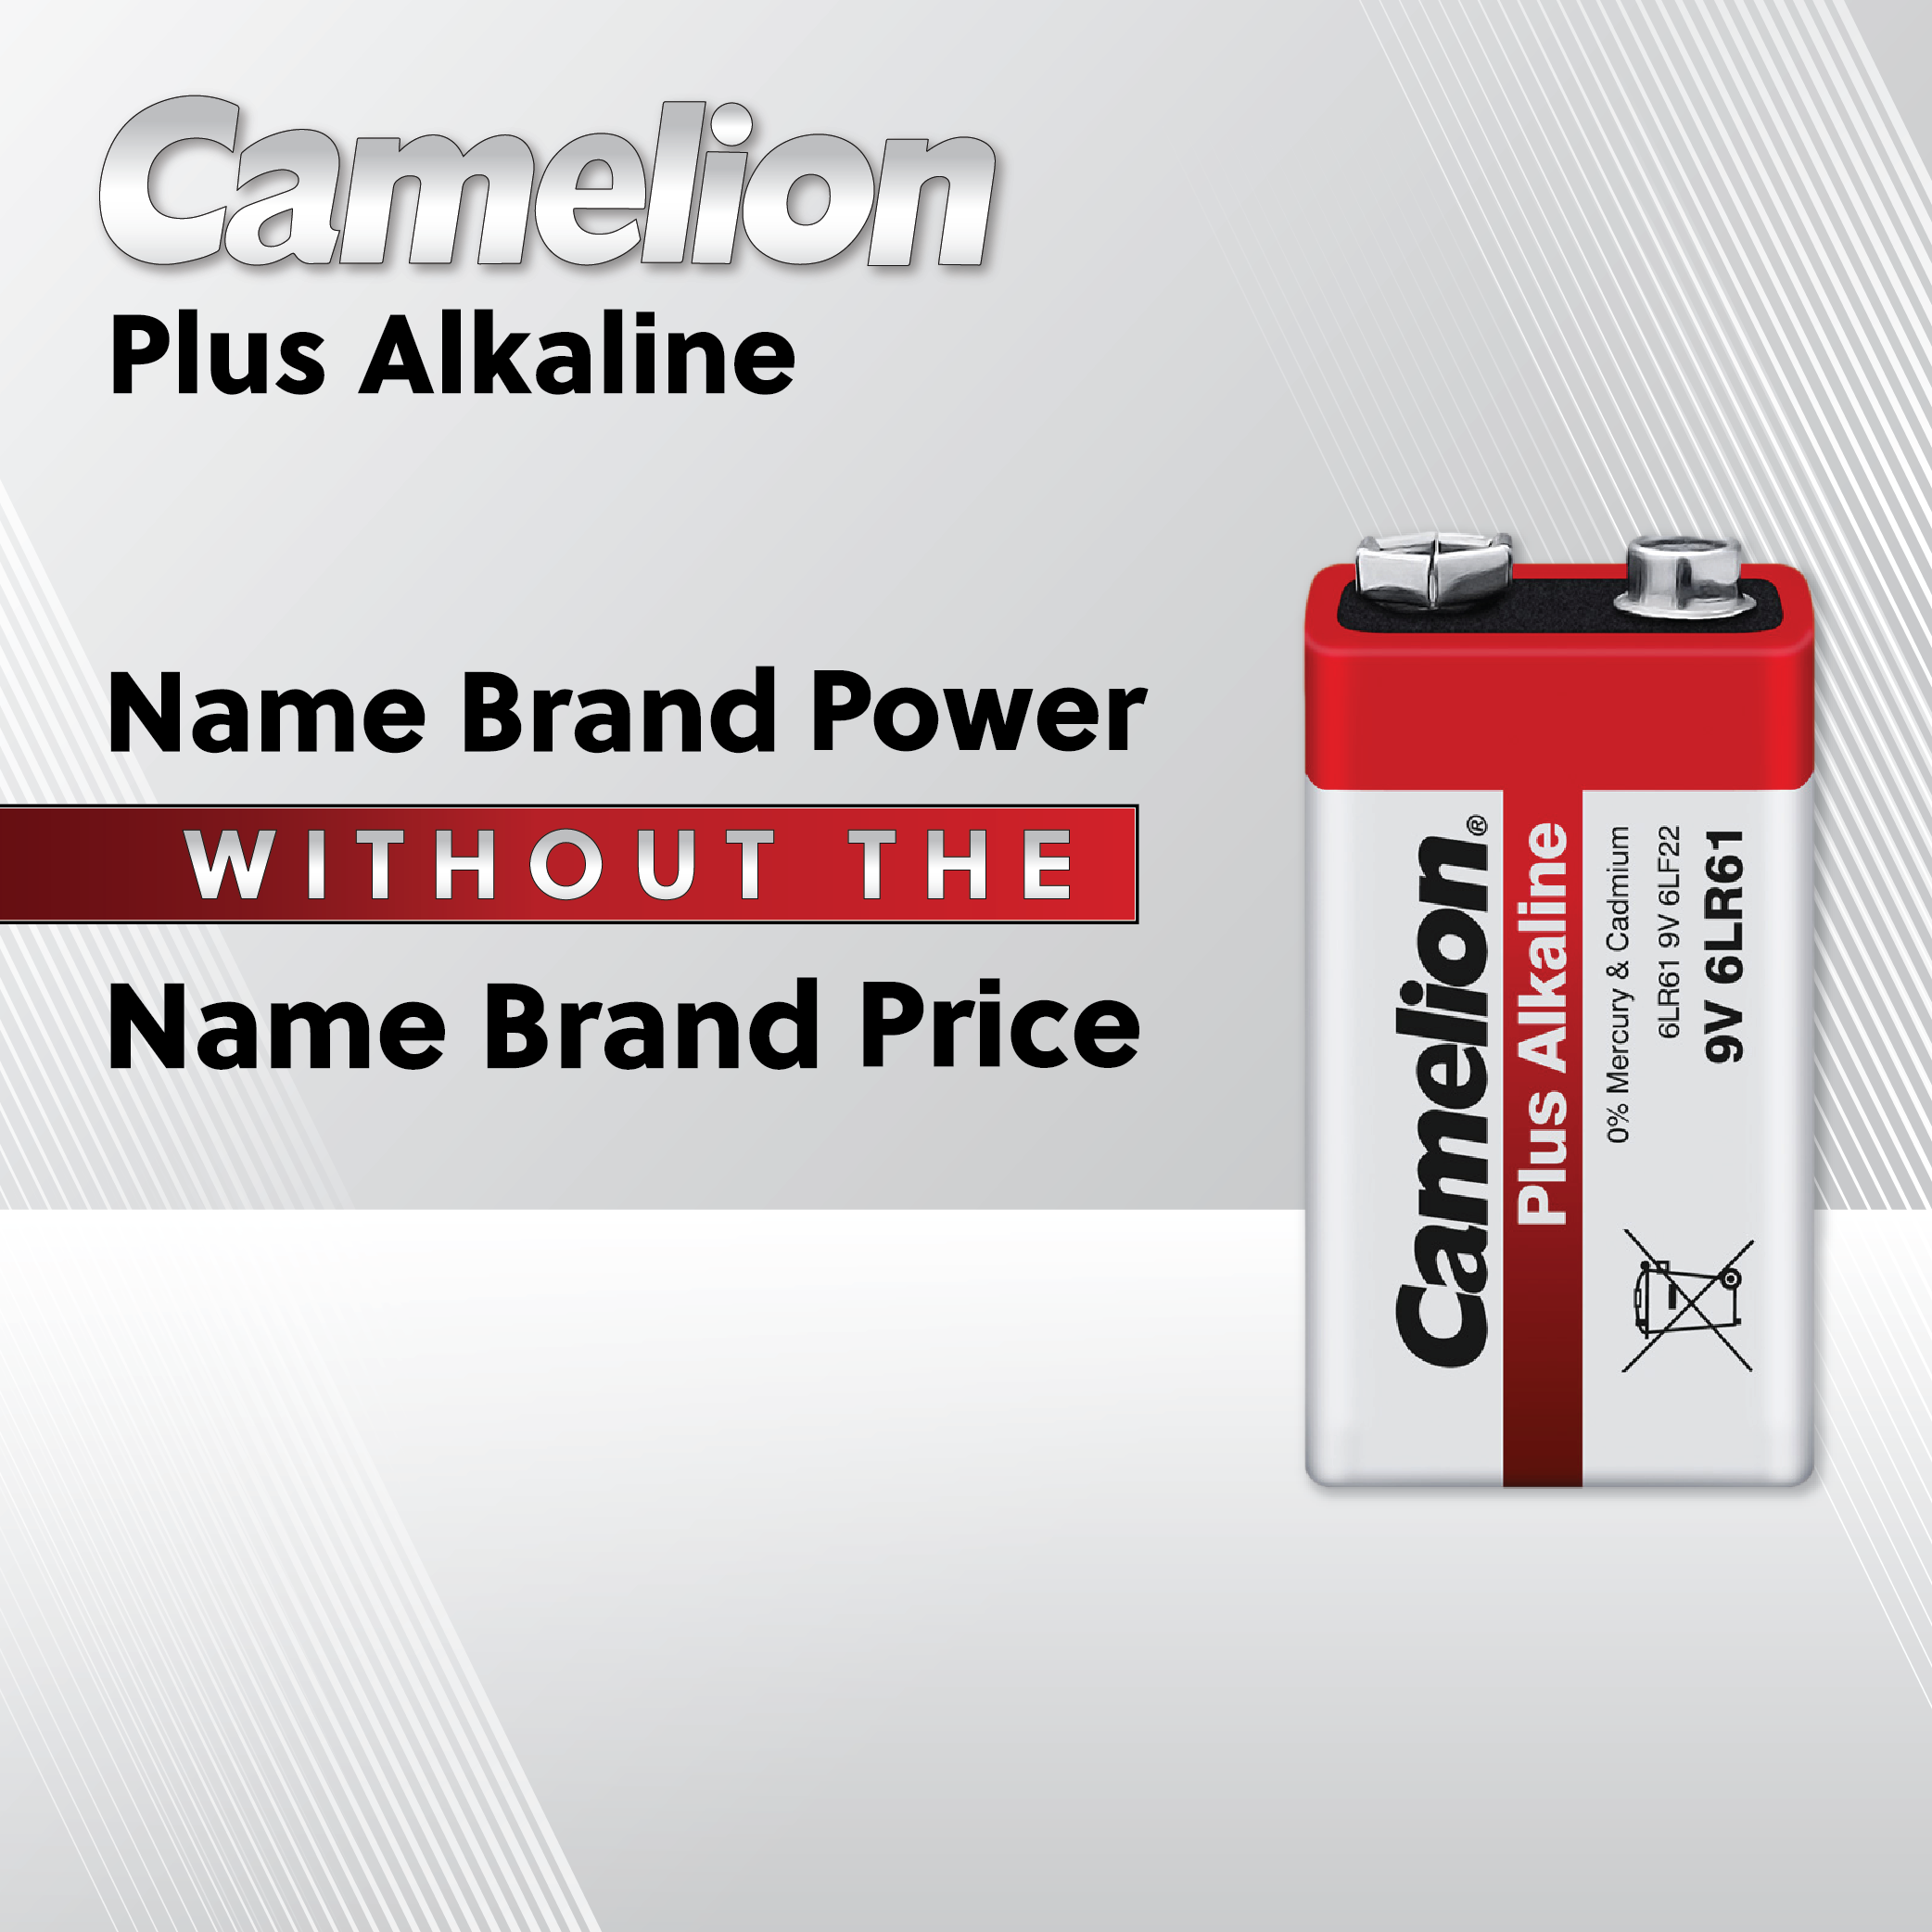 Camelion AAA Alkaline Plus Hard Plastic Case of 24